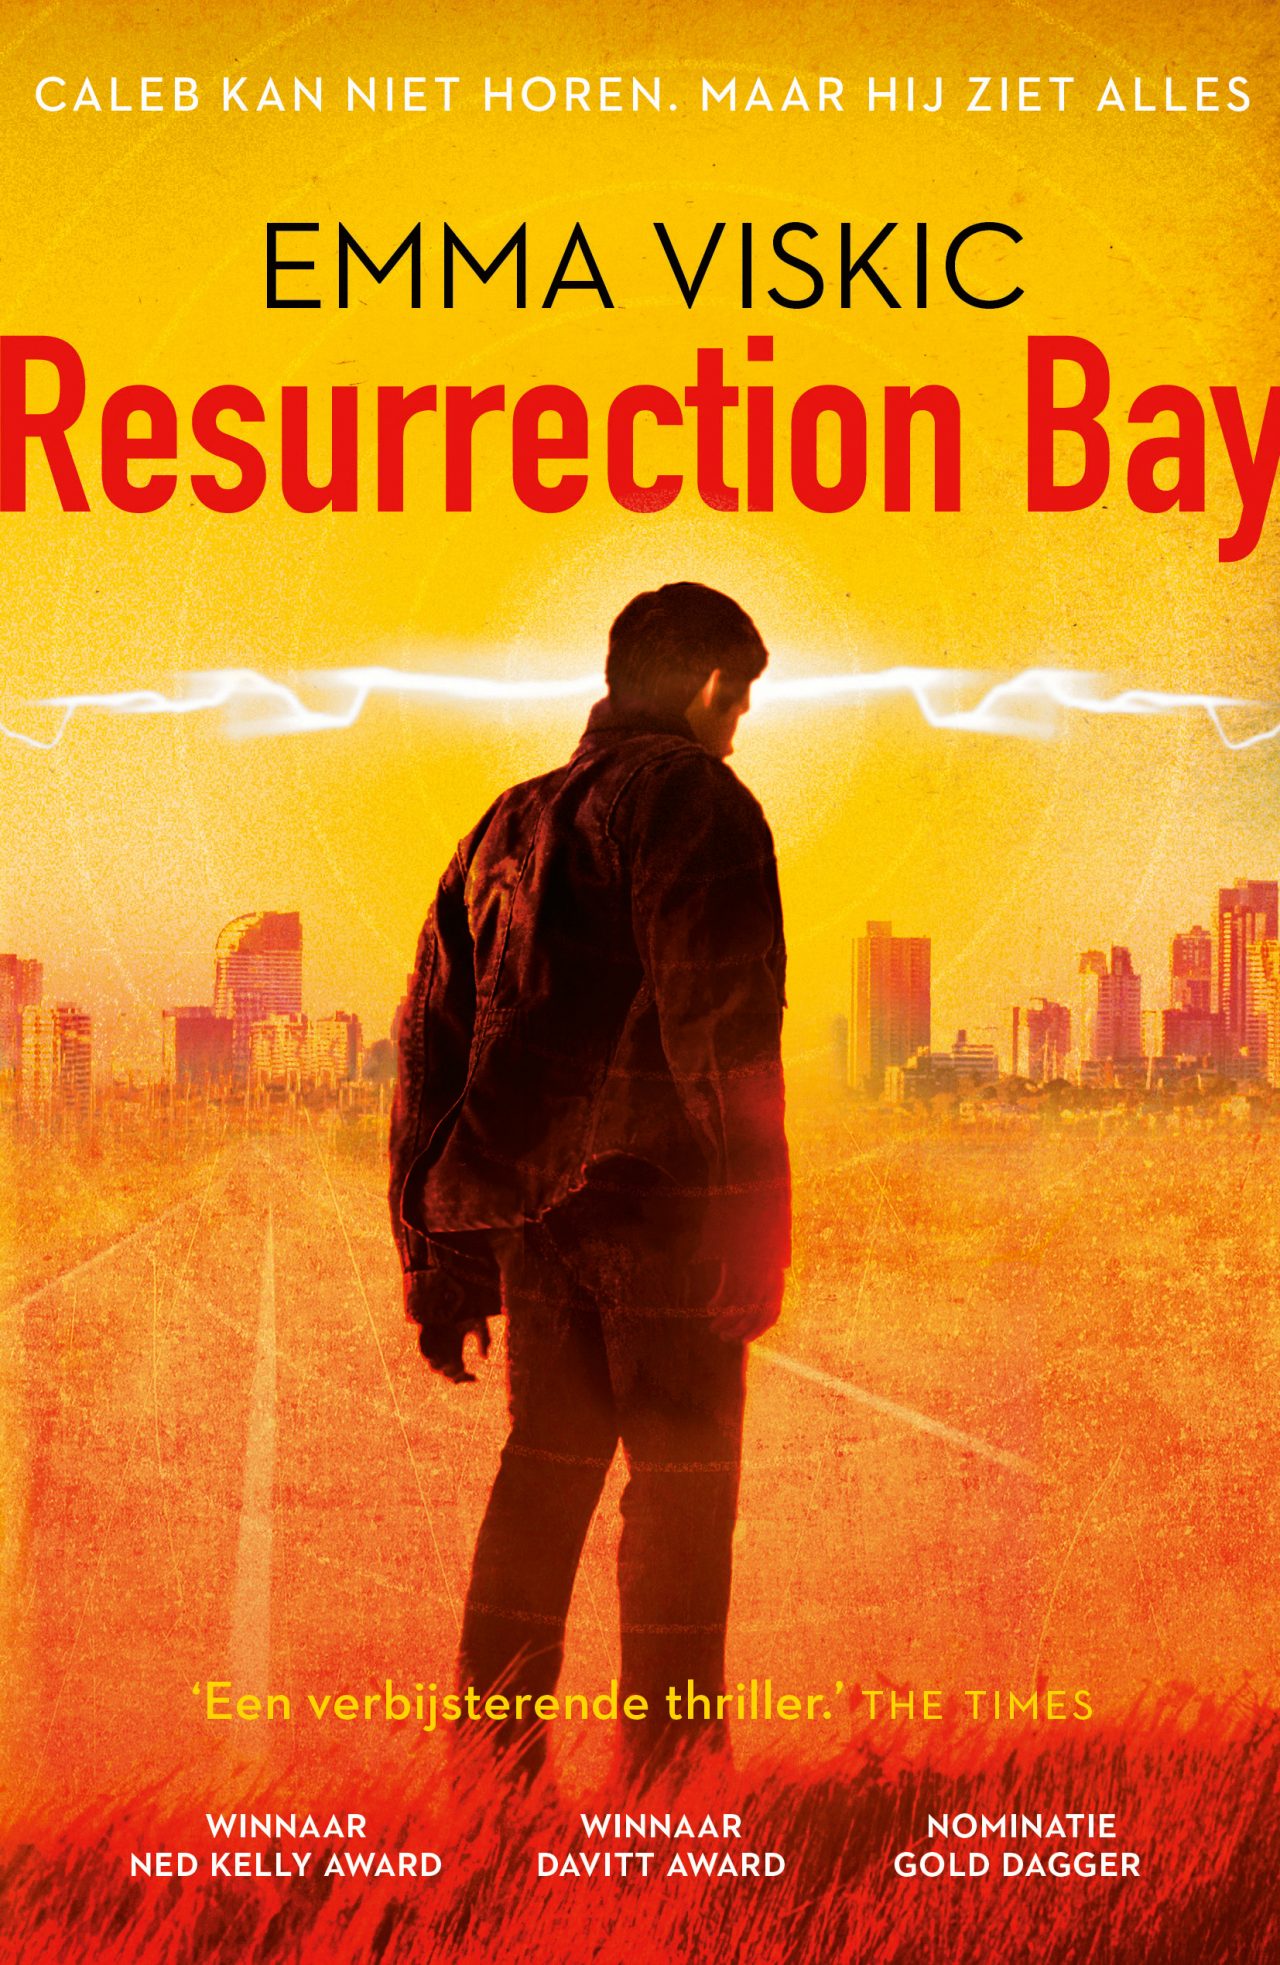 resurrection bay novel